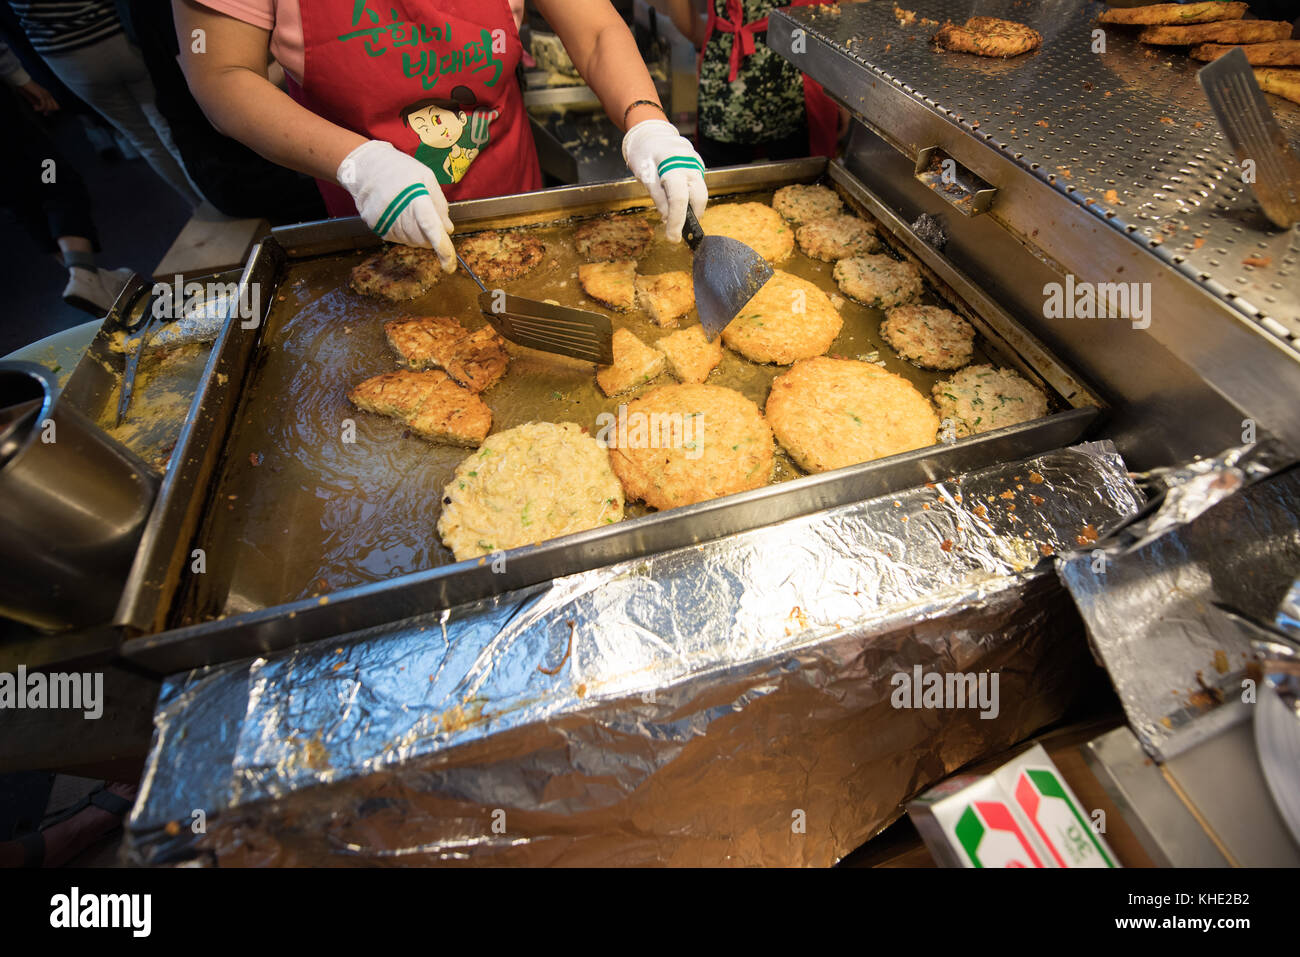 A Korean lady prepares a korean street food called 'Bindaeduk' by frying ground up Mung bean batter in a shallow hot oil. Kwangjang Market, Seoul 2017. Stock Photo